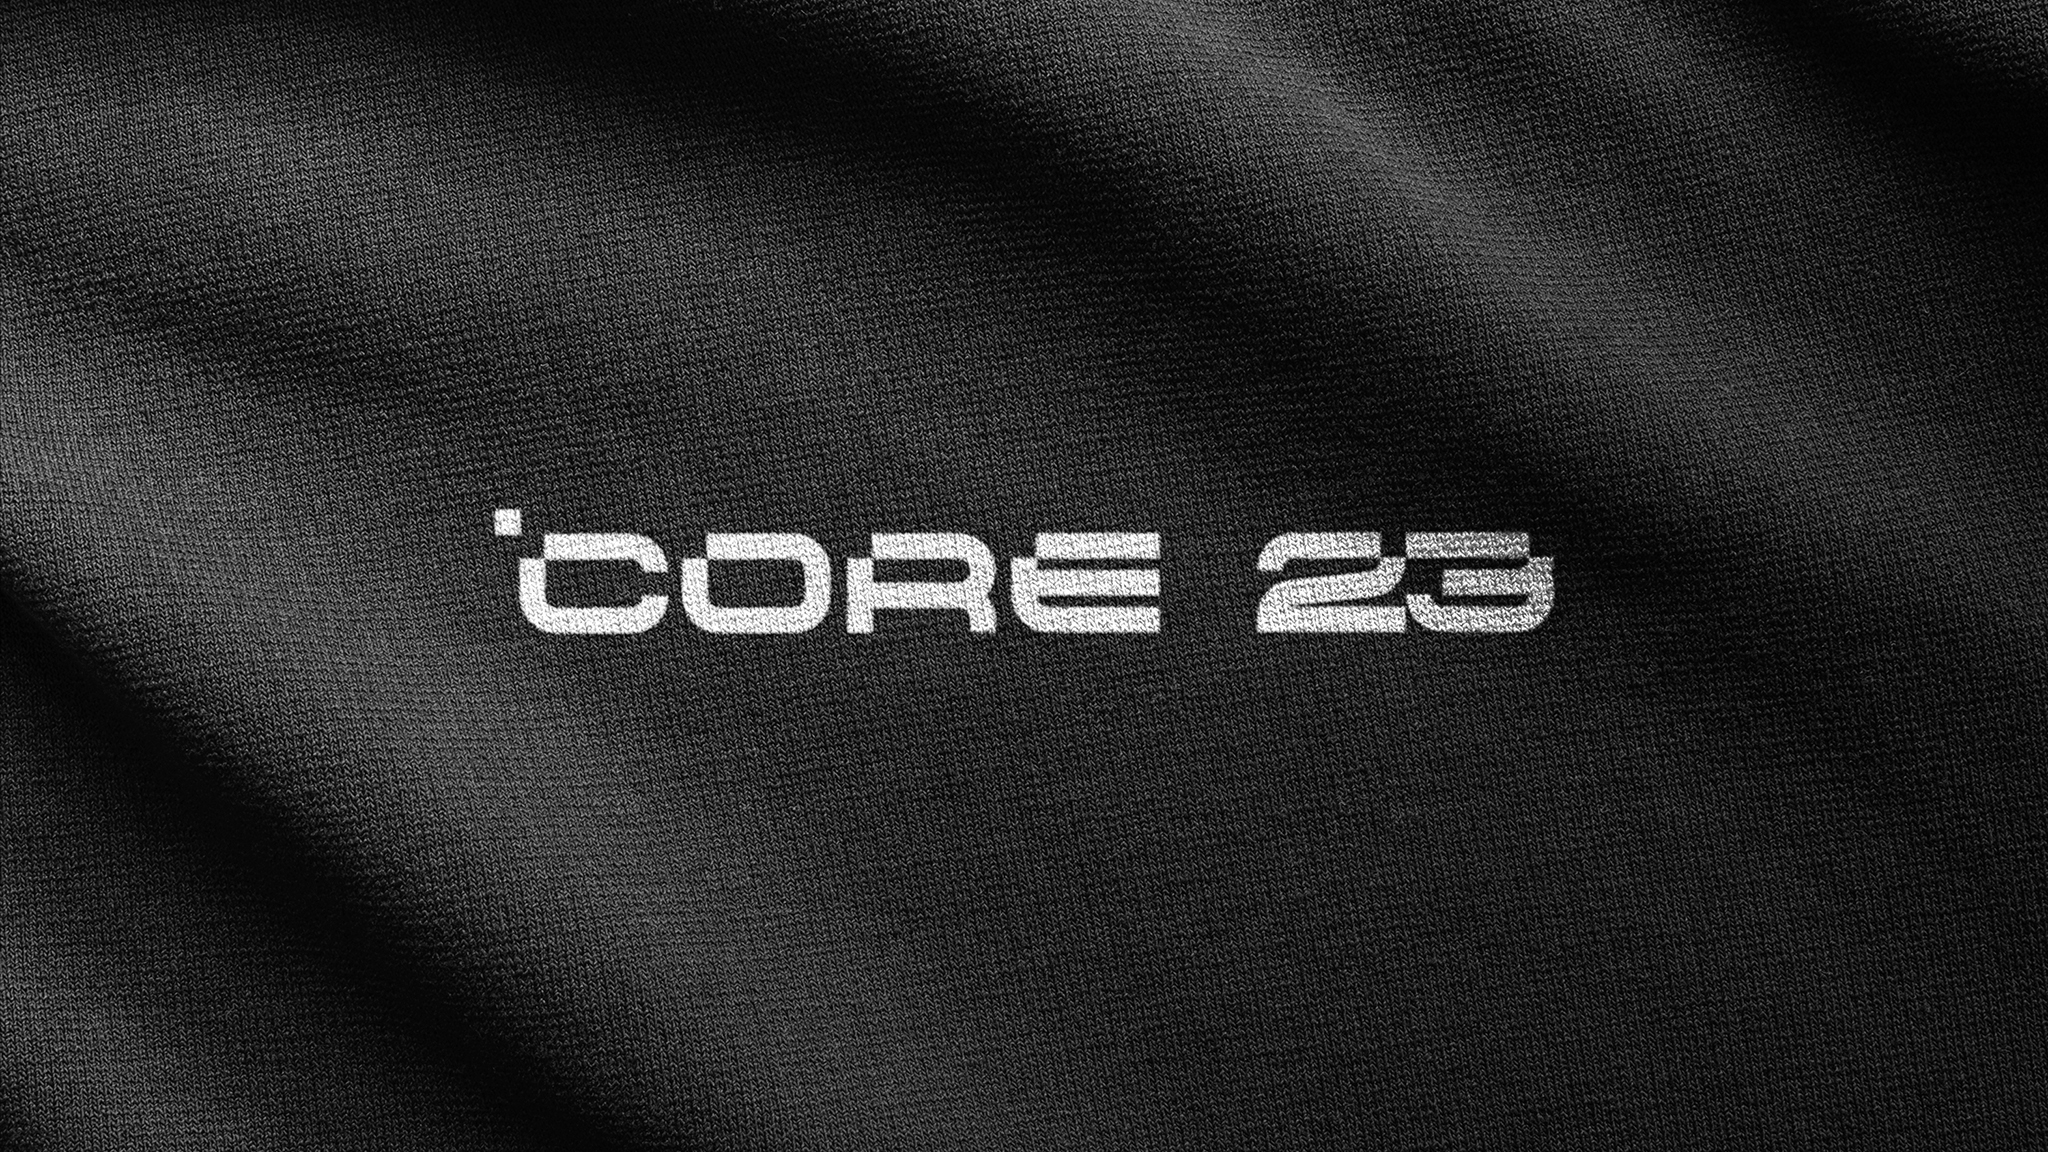 Gilbert Rugby CORE 23 fabric | Mad Panda Media | Creative Marketing Agency